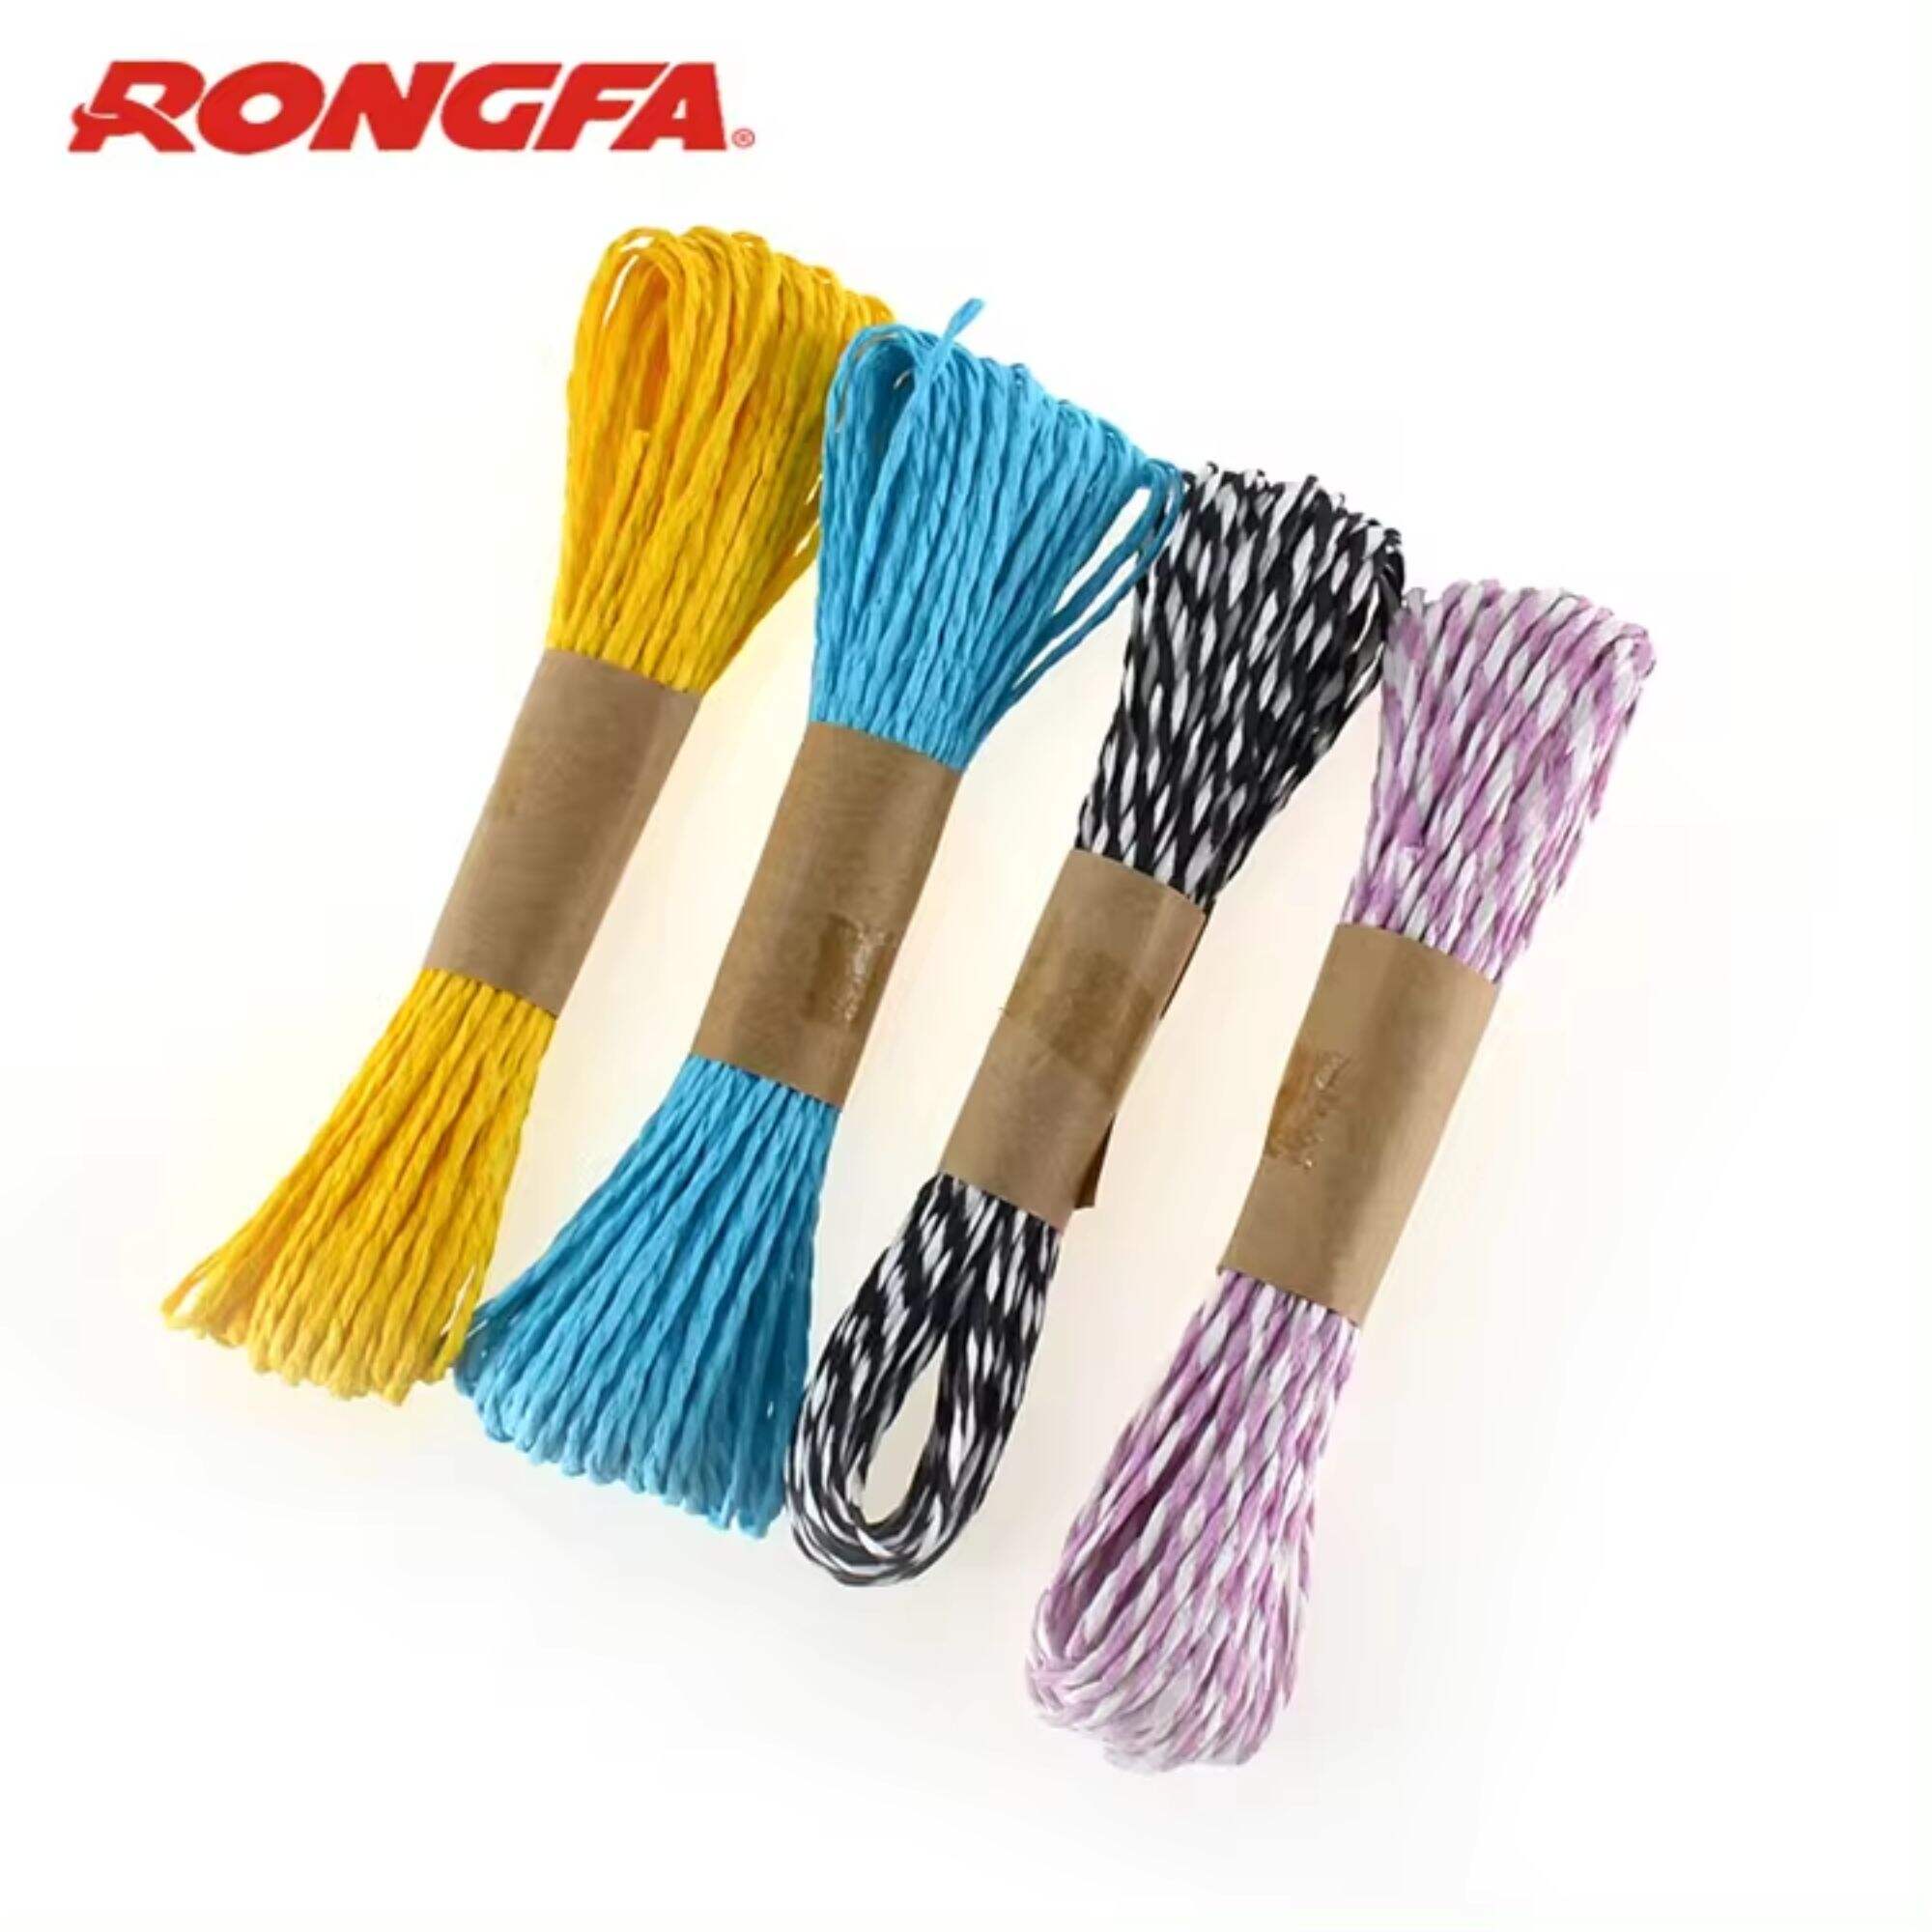 Colorful Paper Rope Rope bundle